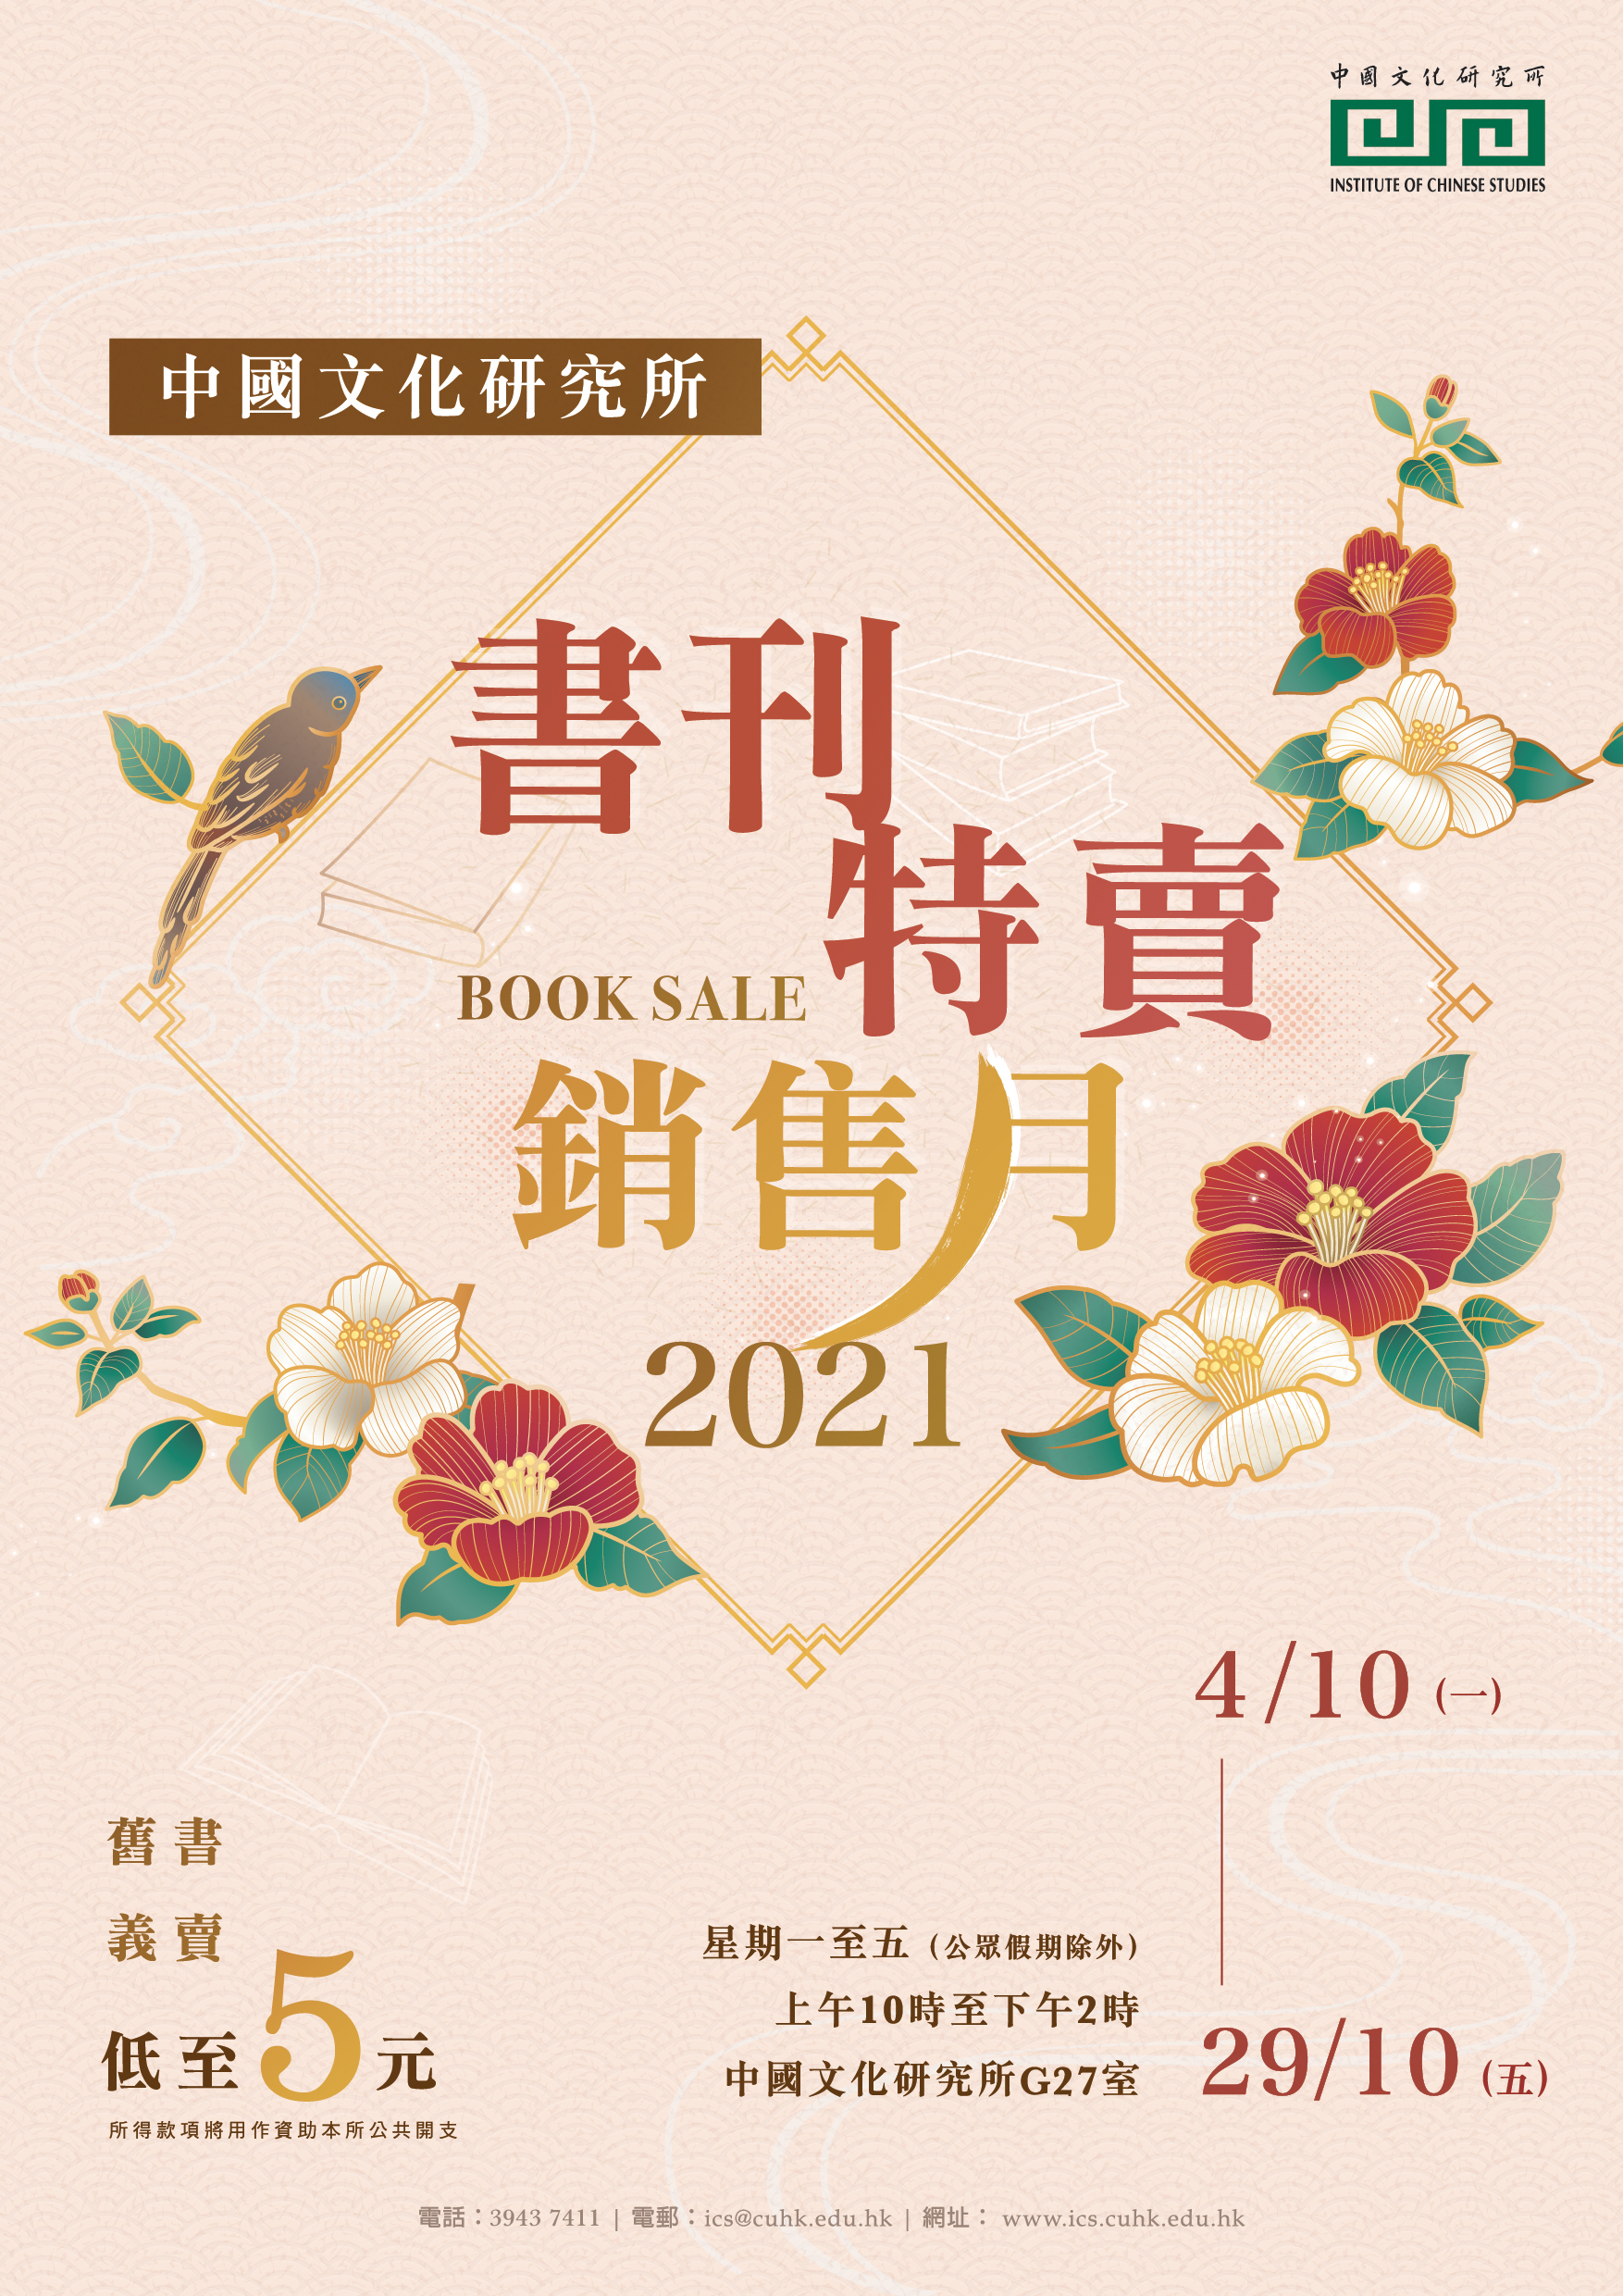 20211004-29_booksale.jpg